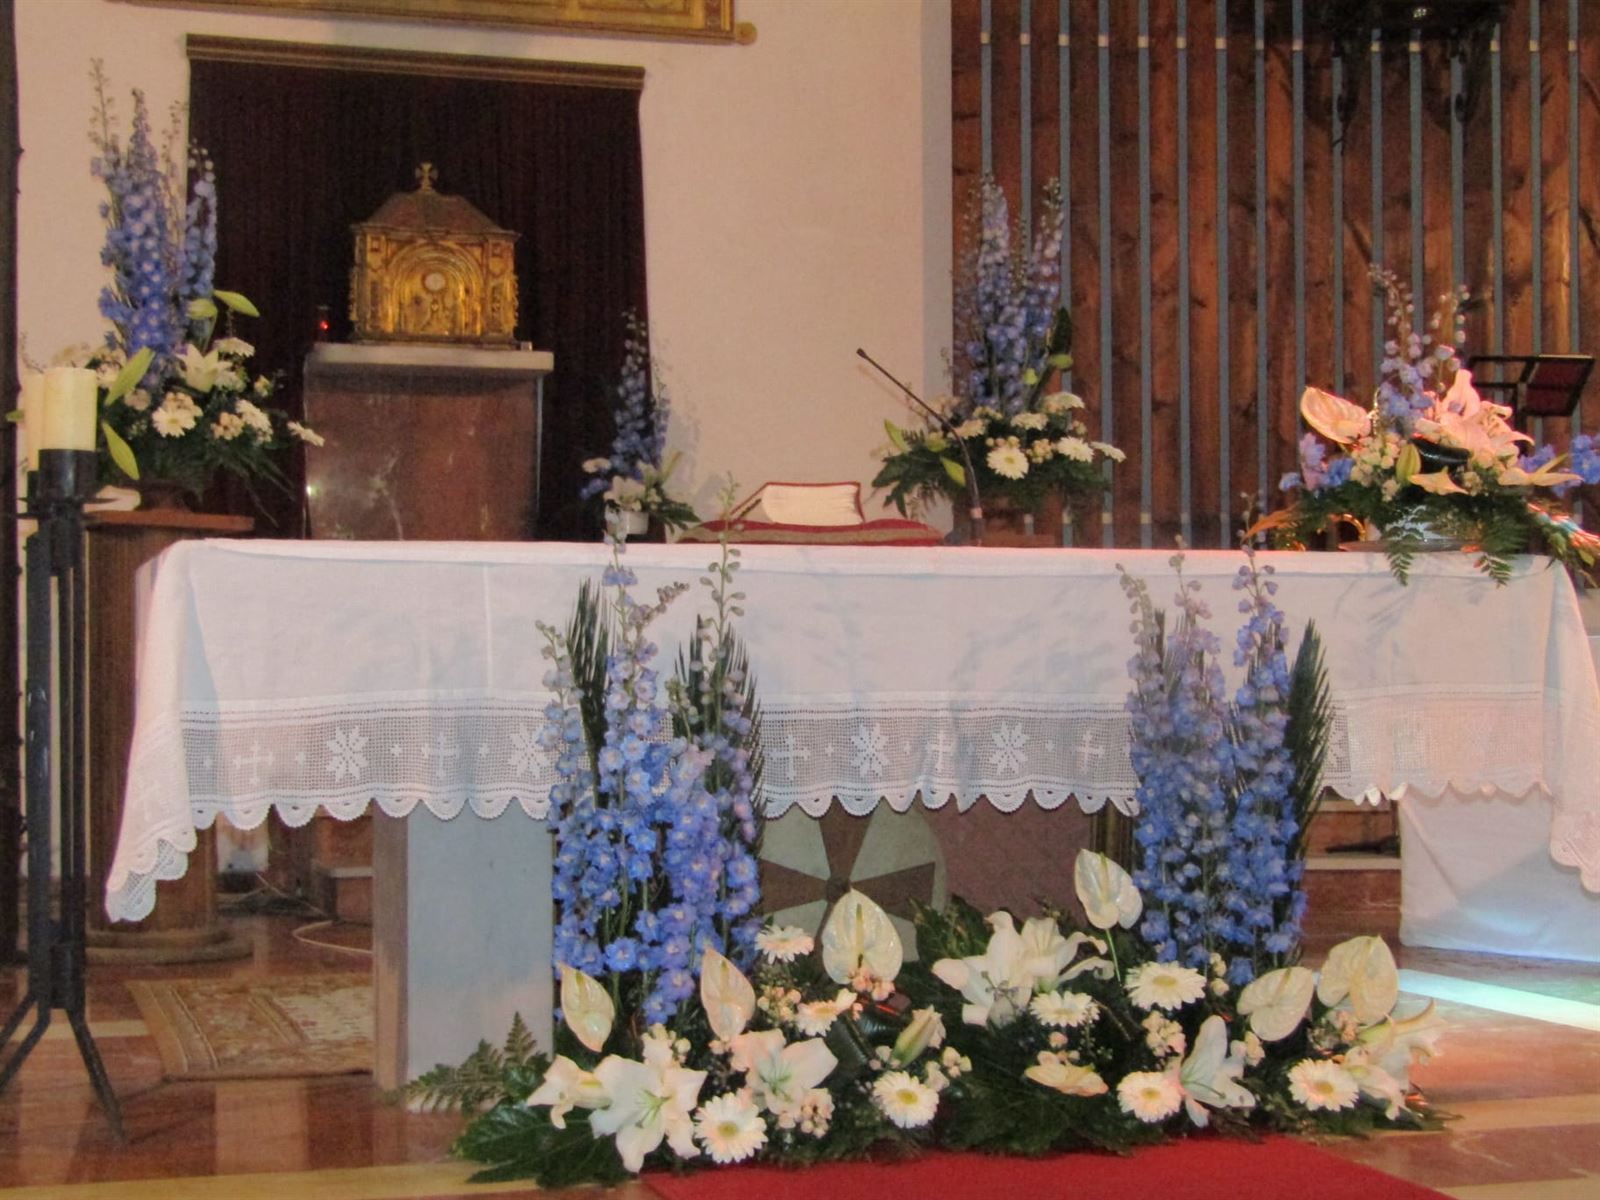 Arreglo floral iglesia para ceremonia - Imagen 2